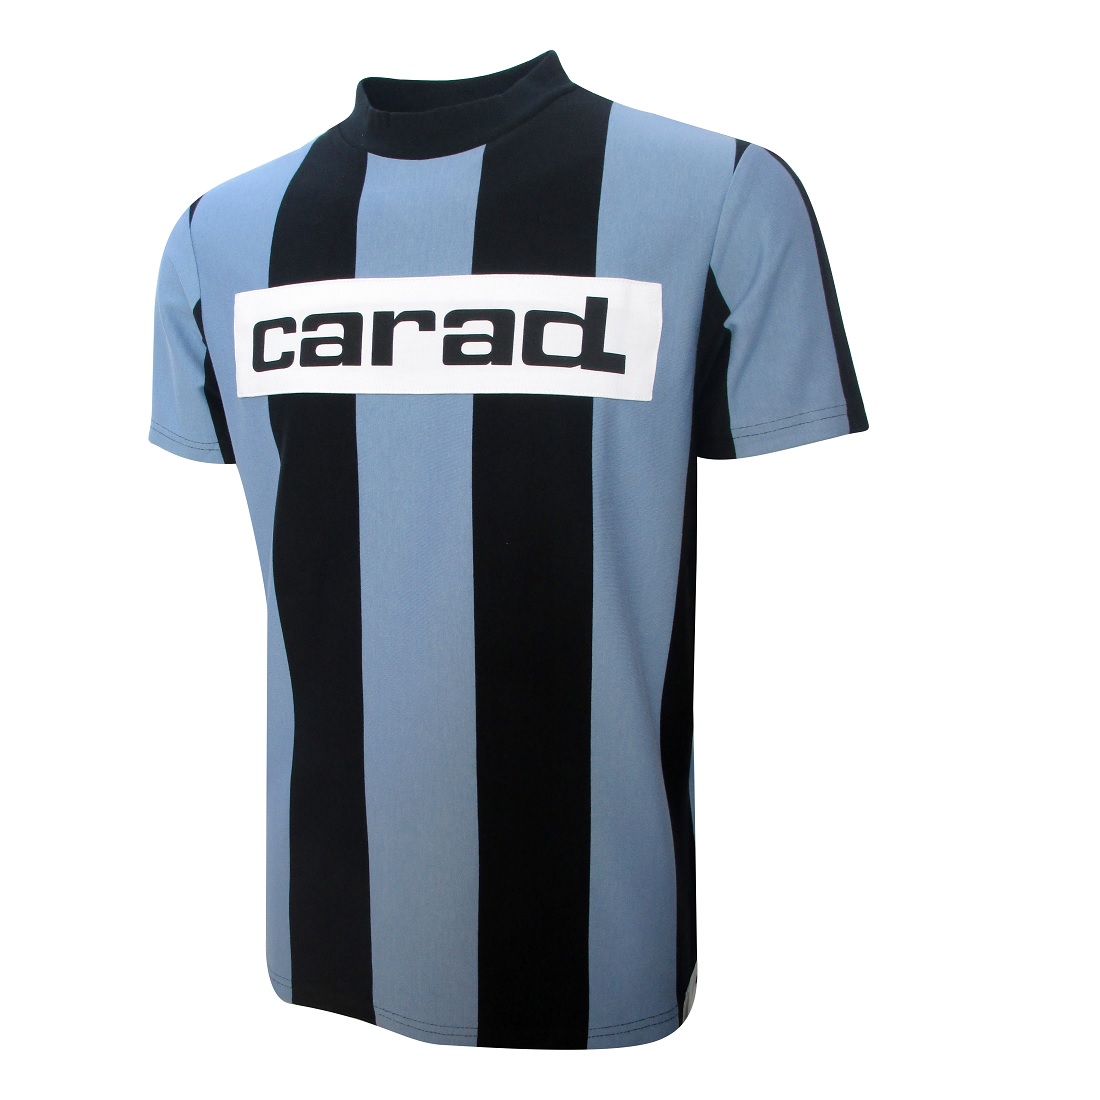 Kano sneeuw Prelude Legendarisch retro shirt Club Brugge Carad 1972/1973 - 1891 Shop